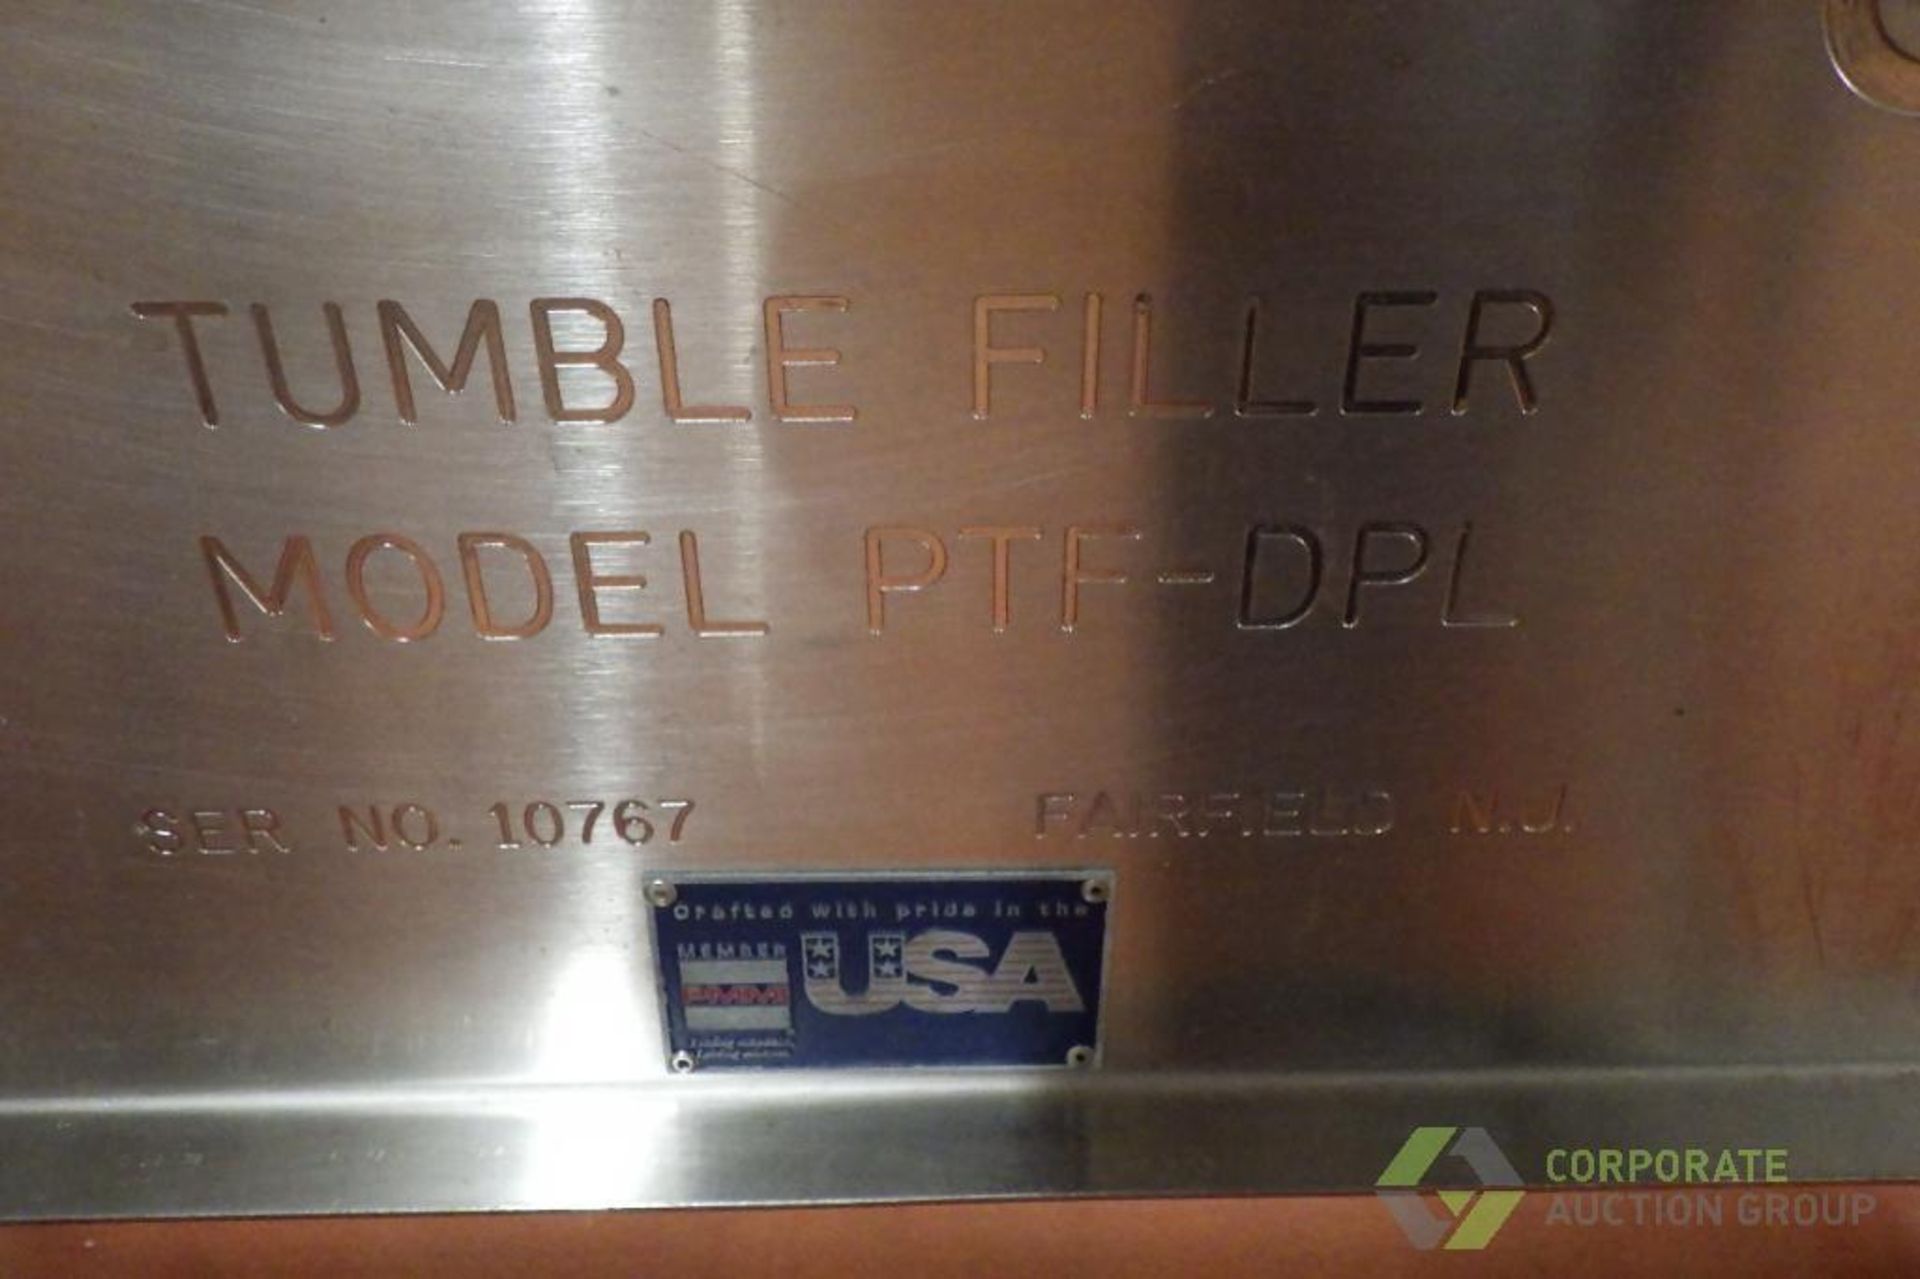 SOLBERN mod. PTF-DPL Tumbler Filler - Image 18 of 24